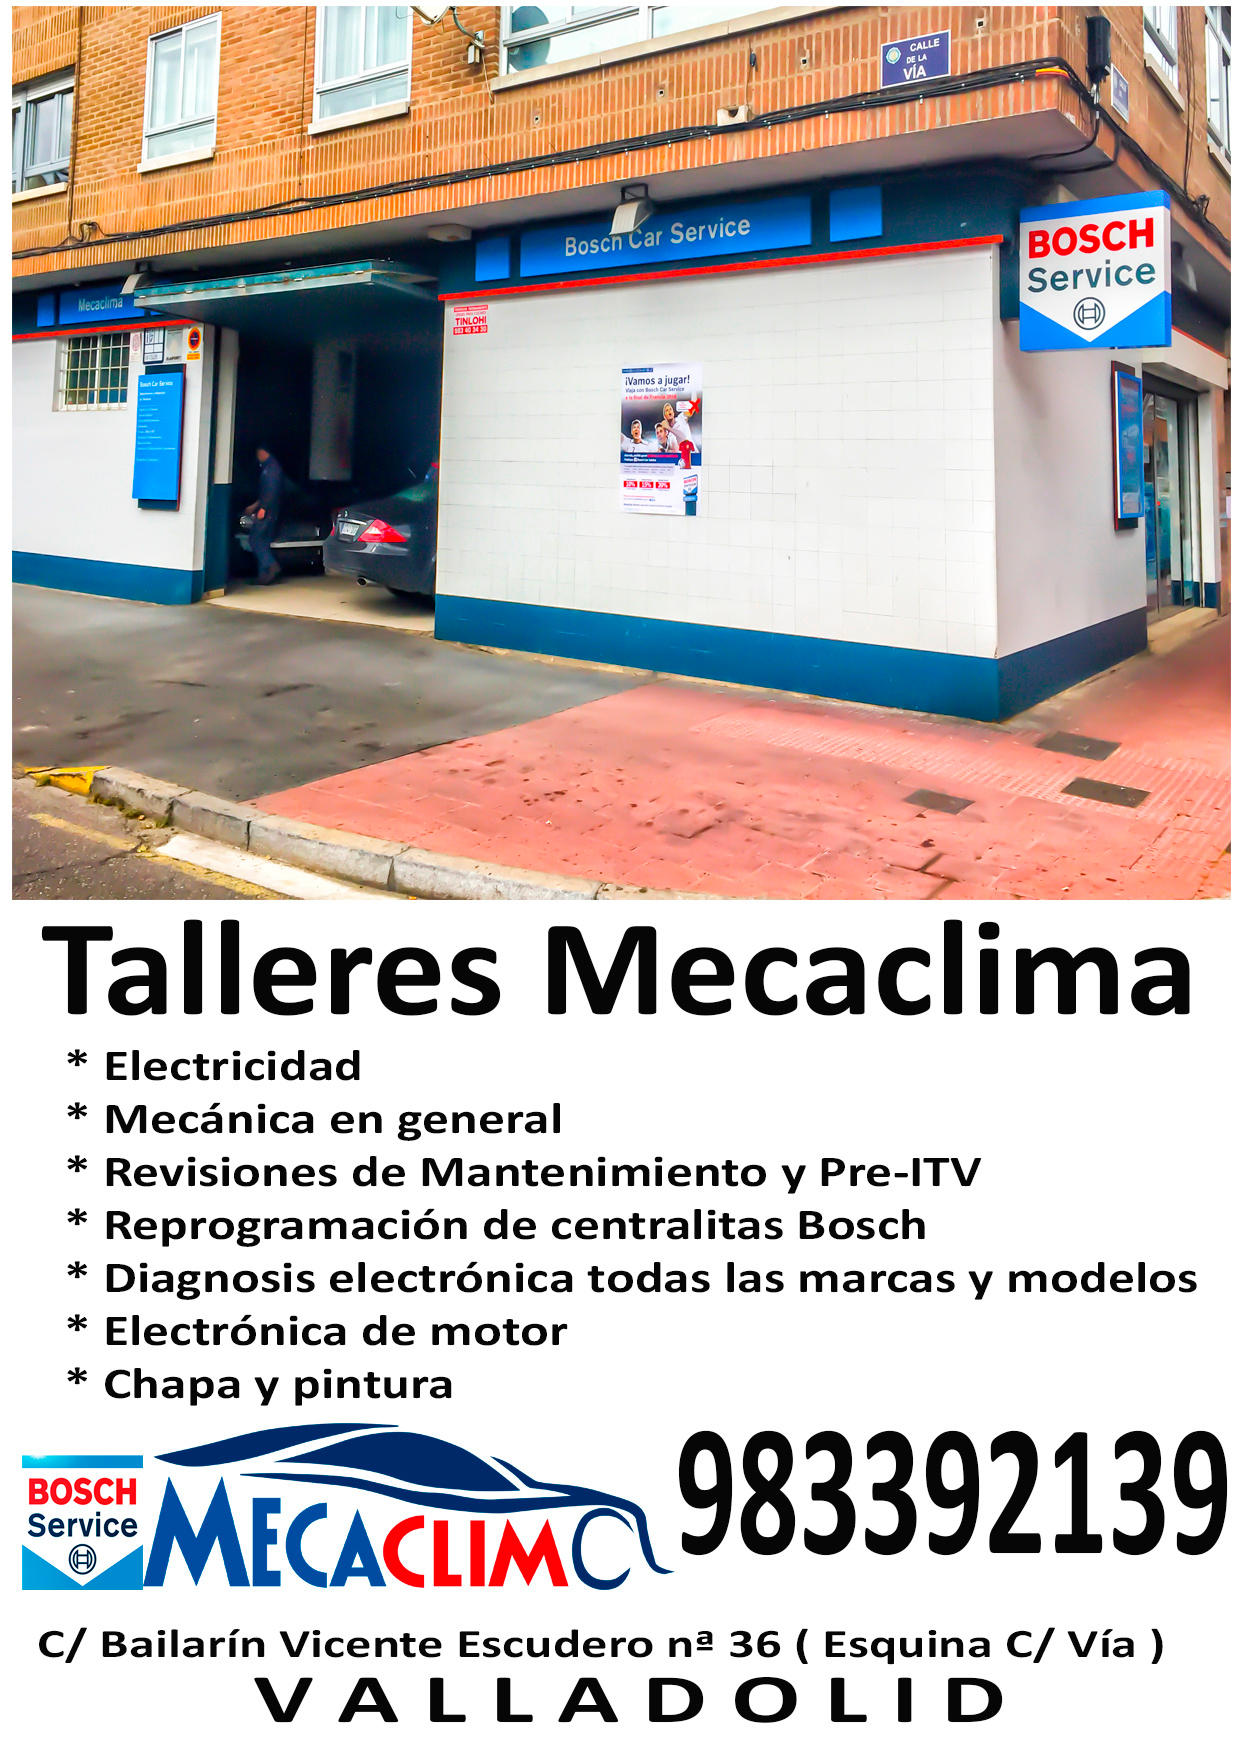 Images Talleres Mecaclima